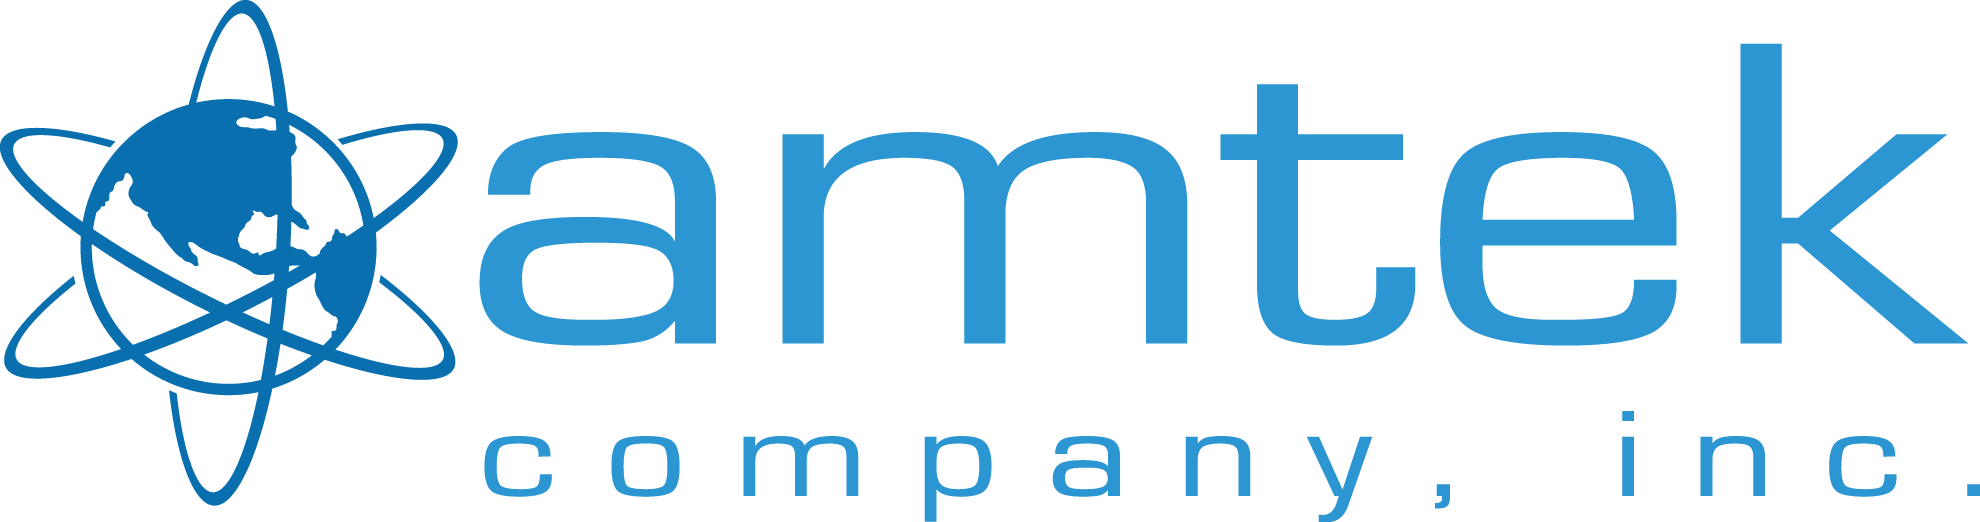 Amtek Company